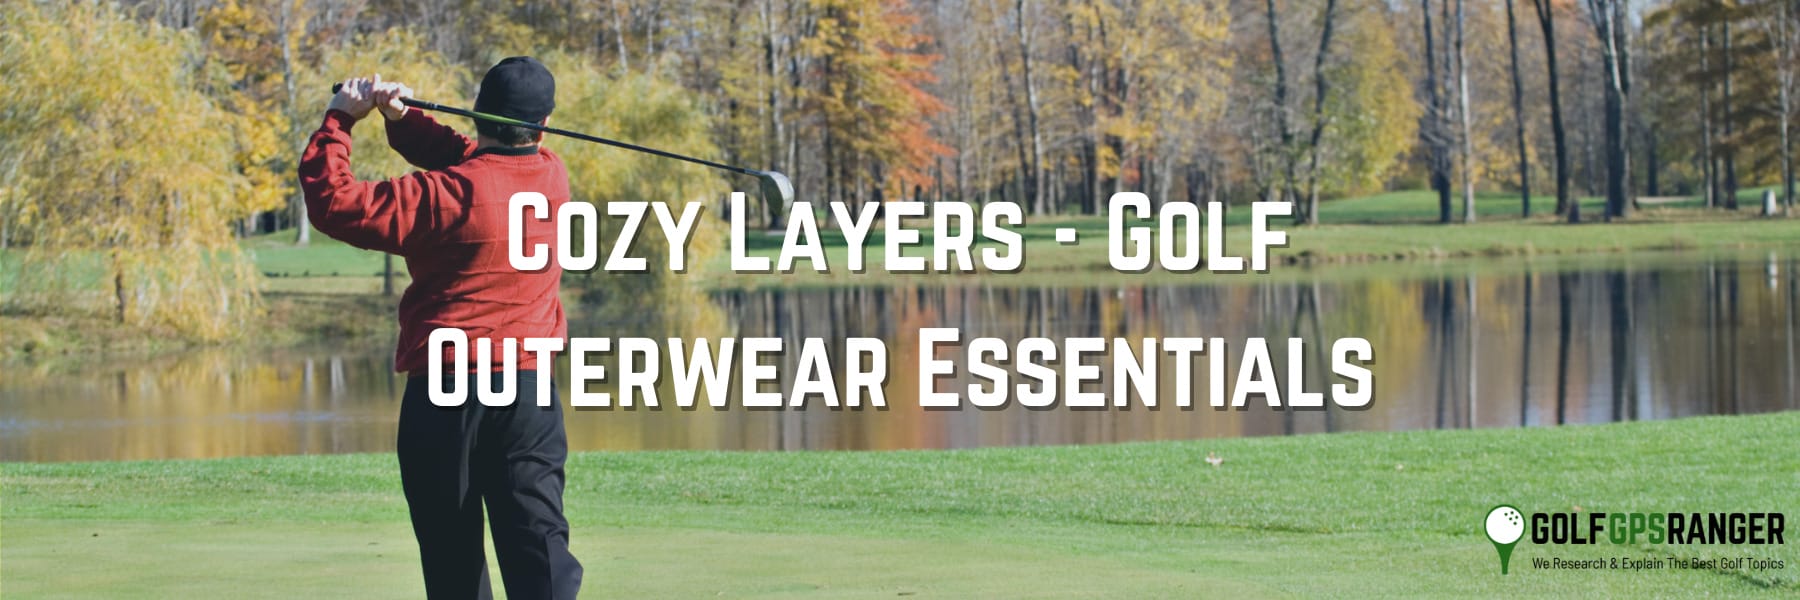 Cozy Layers - Golf Outerwear Essentials